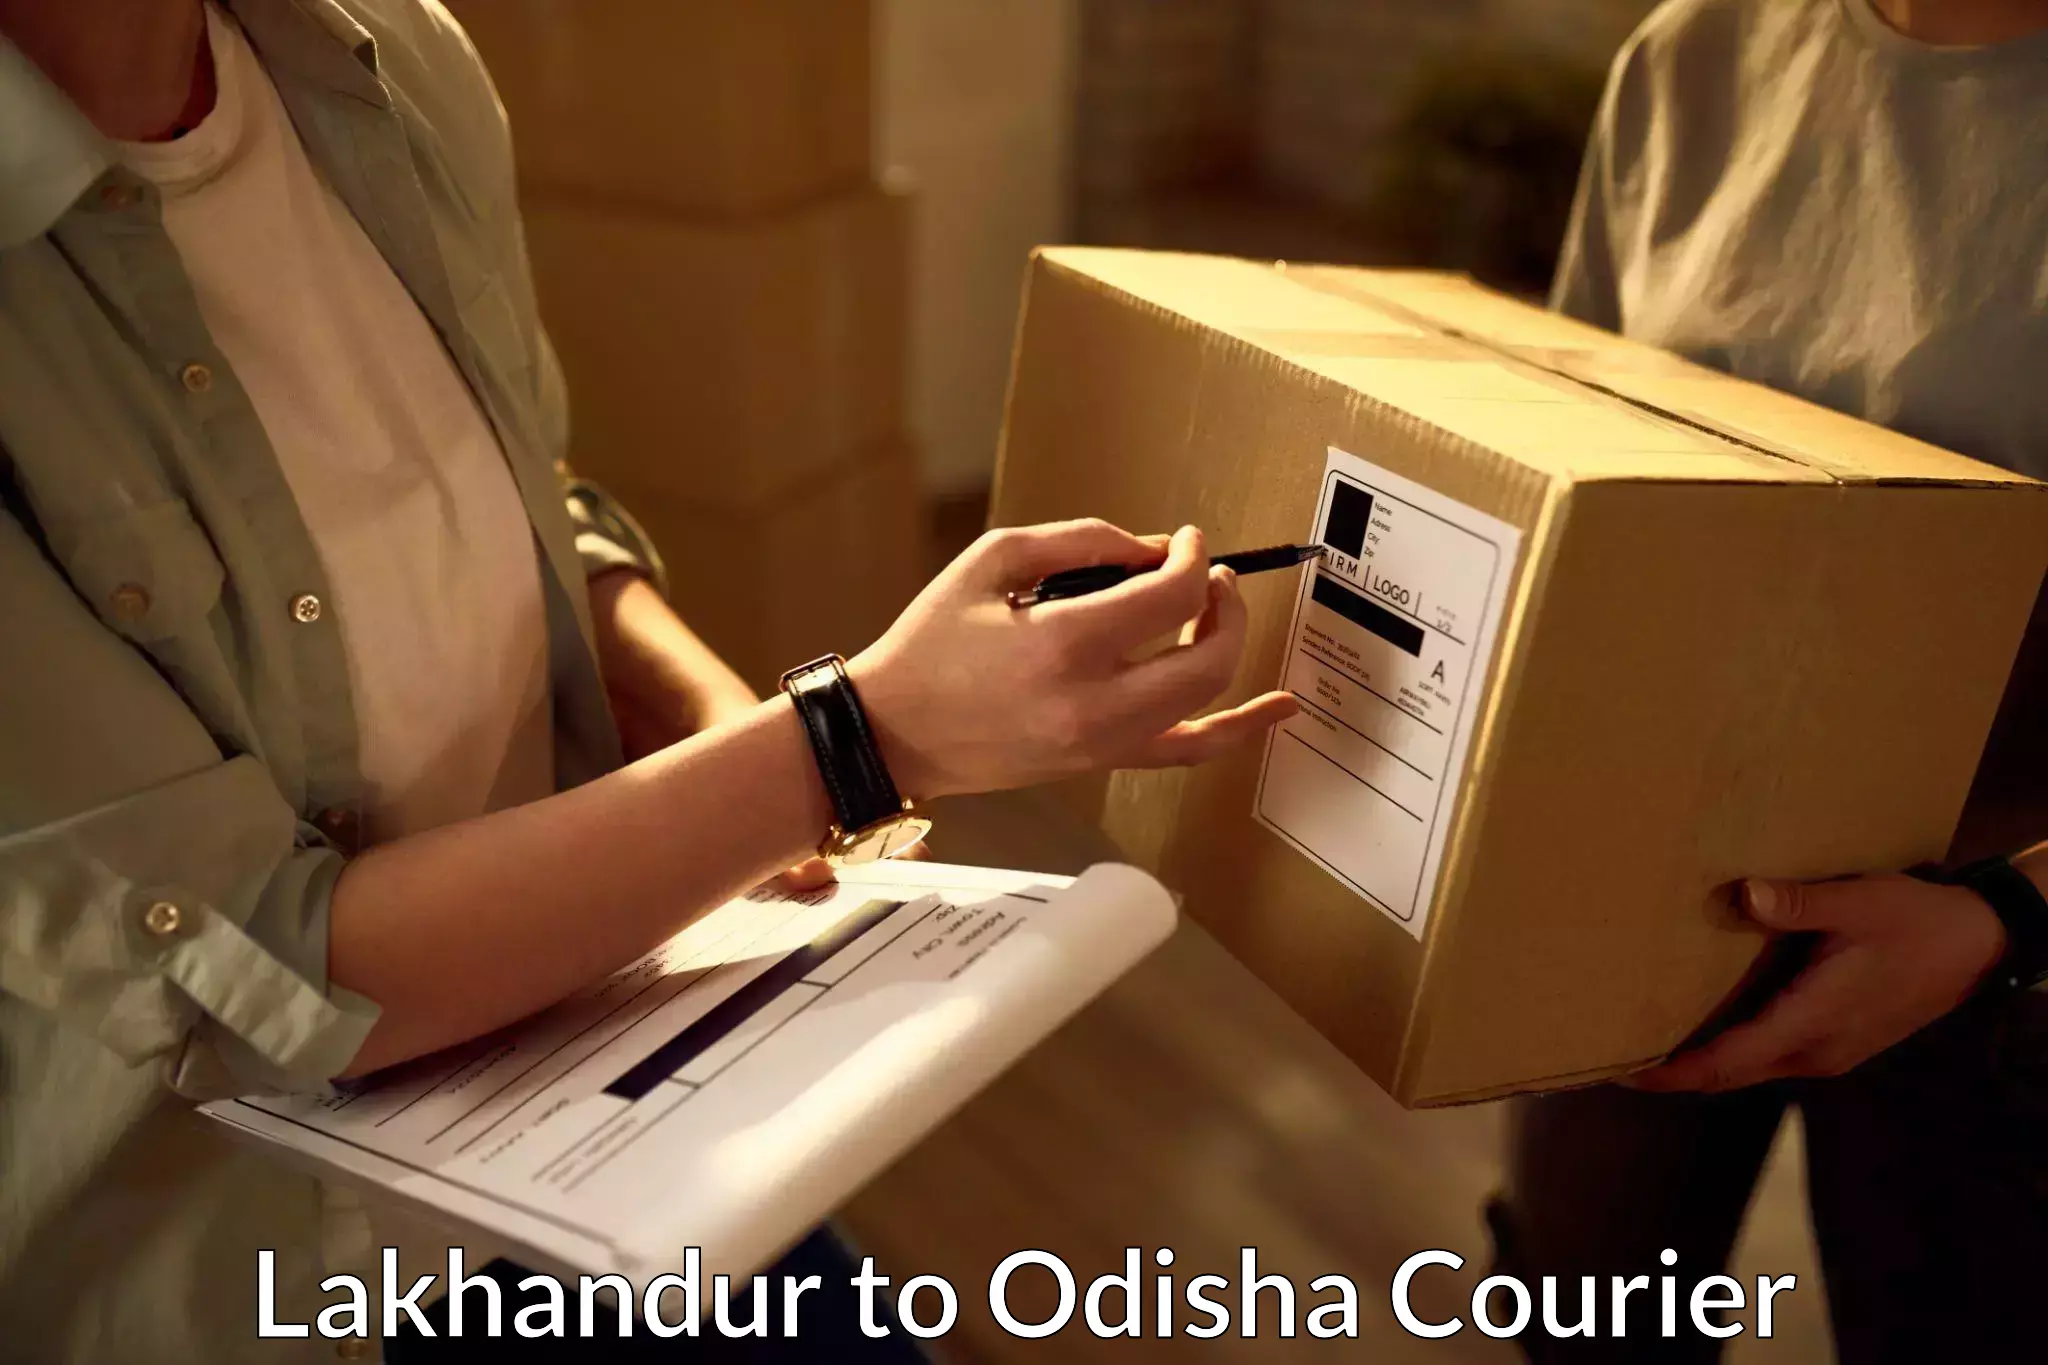 International courier networks Lakhandur to Agarpada